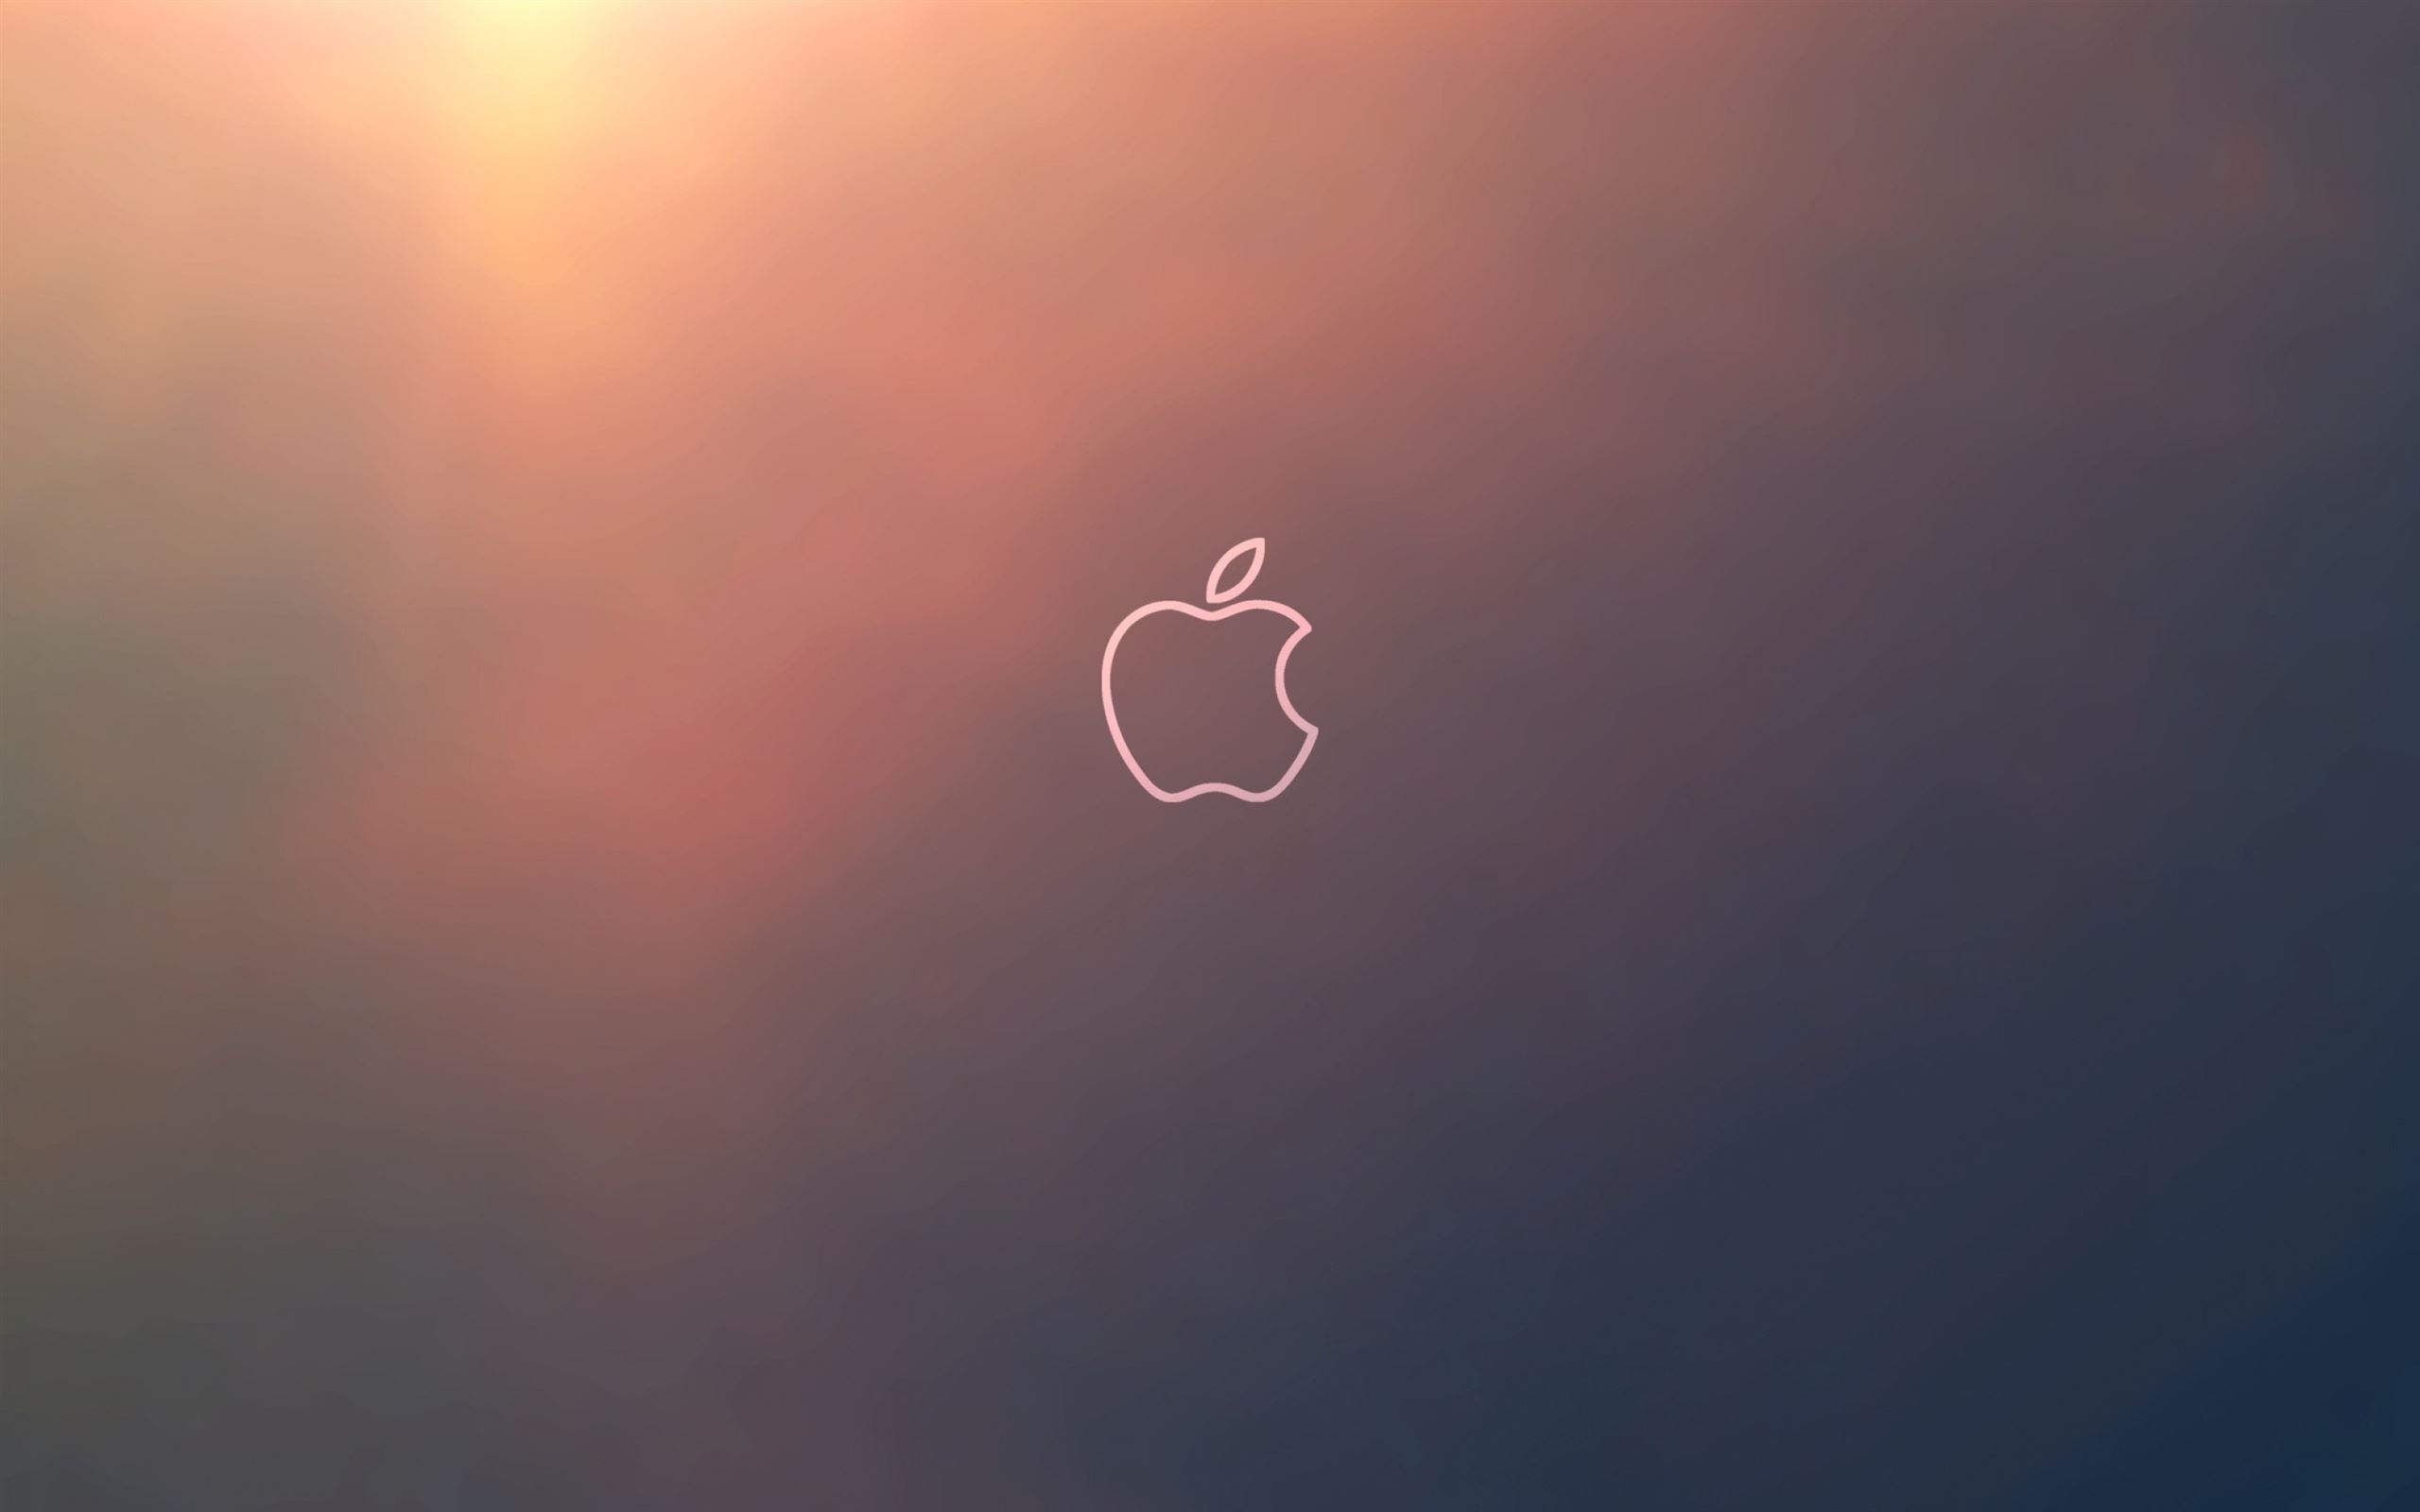 Iconic iMac logo, Apple's legendary brand, High-quality wallpapers, Mac lover's delight, 2560x1600 HD Desktop